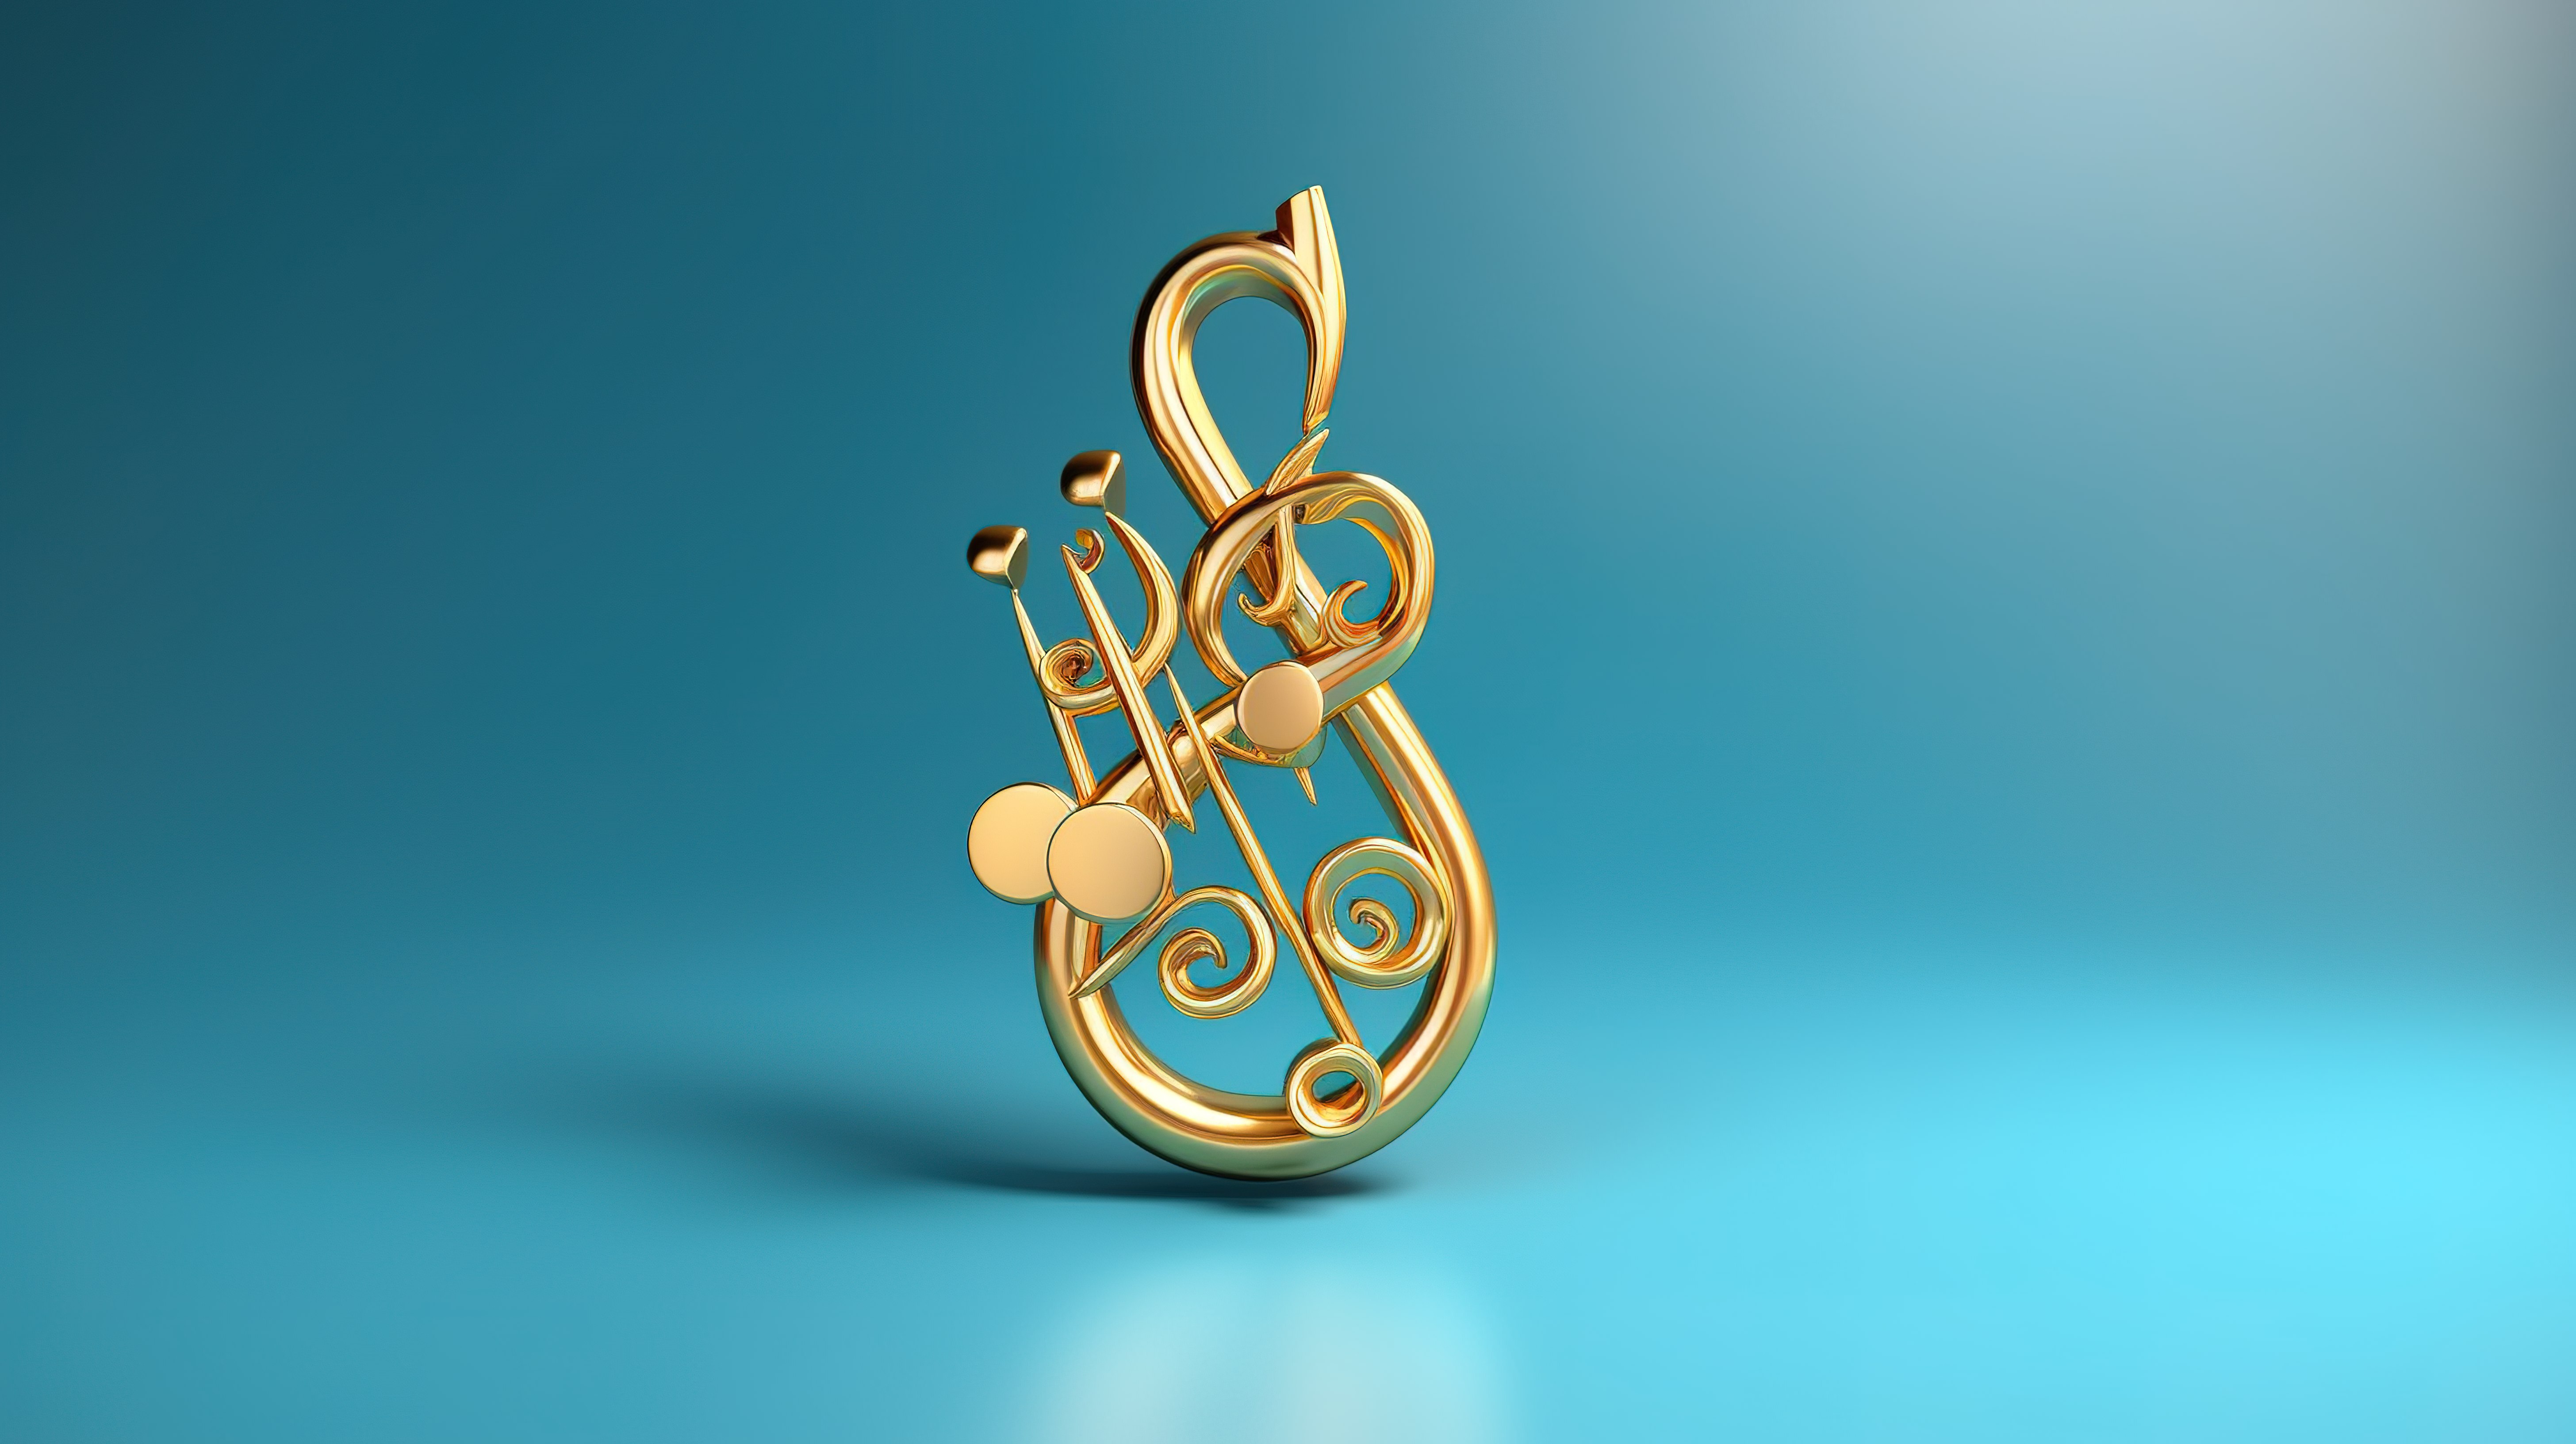 3D 金色音乐符号元素，用于设计逼真的高音谱号和蓝色背景上的音符图片